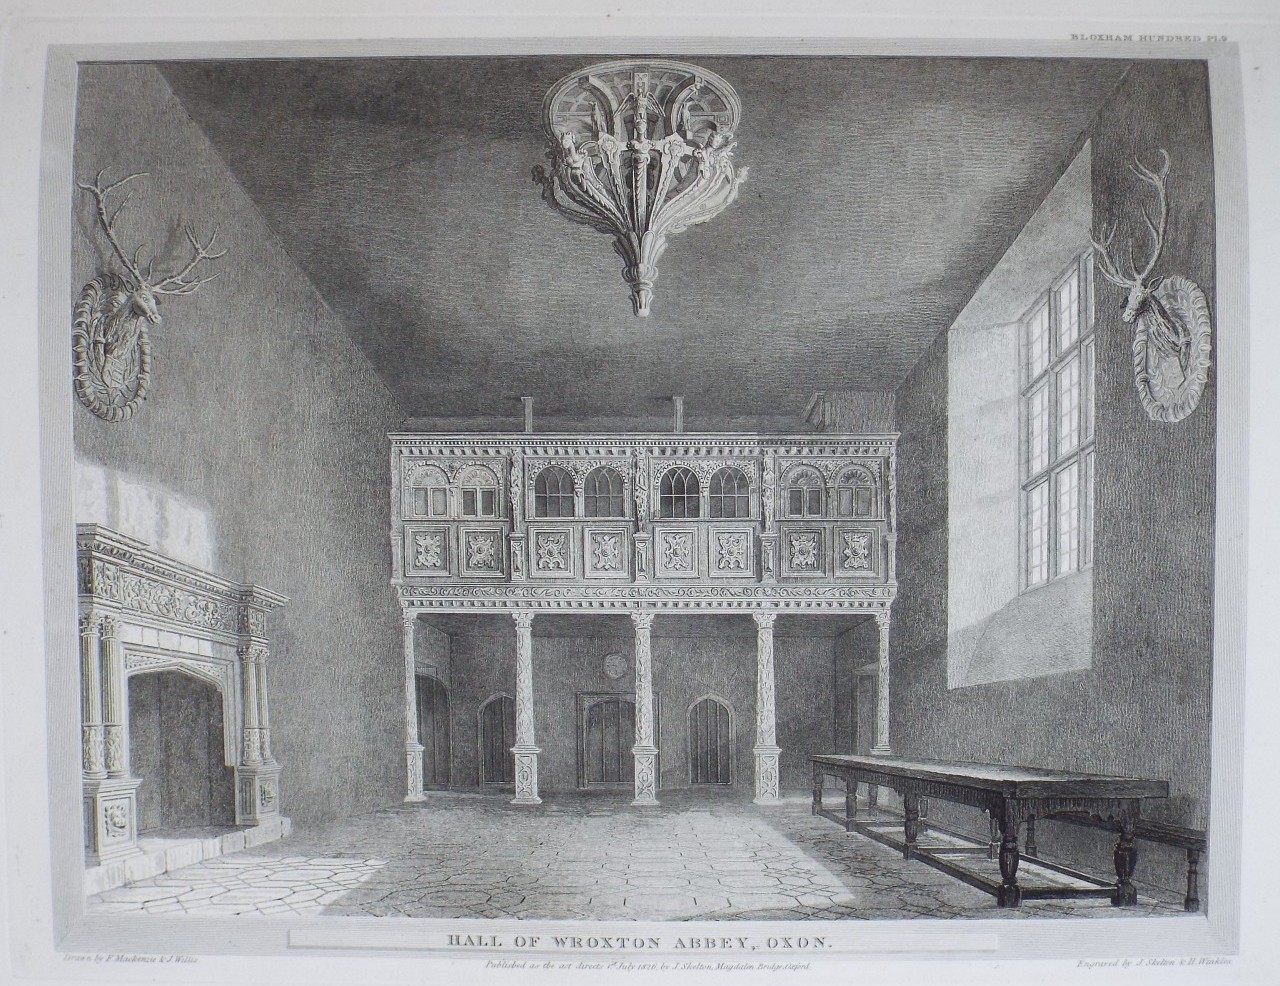 Print - Hall of Wroxton Abbey, Oxon. - Skelton